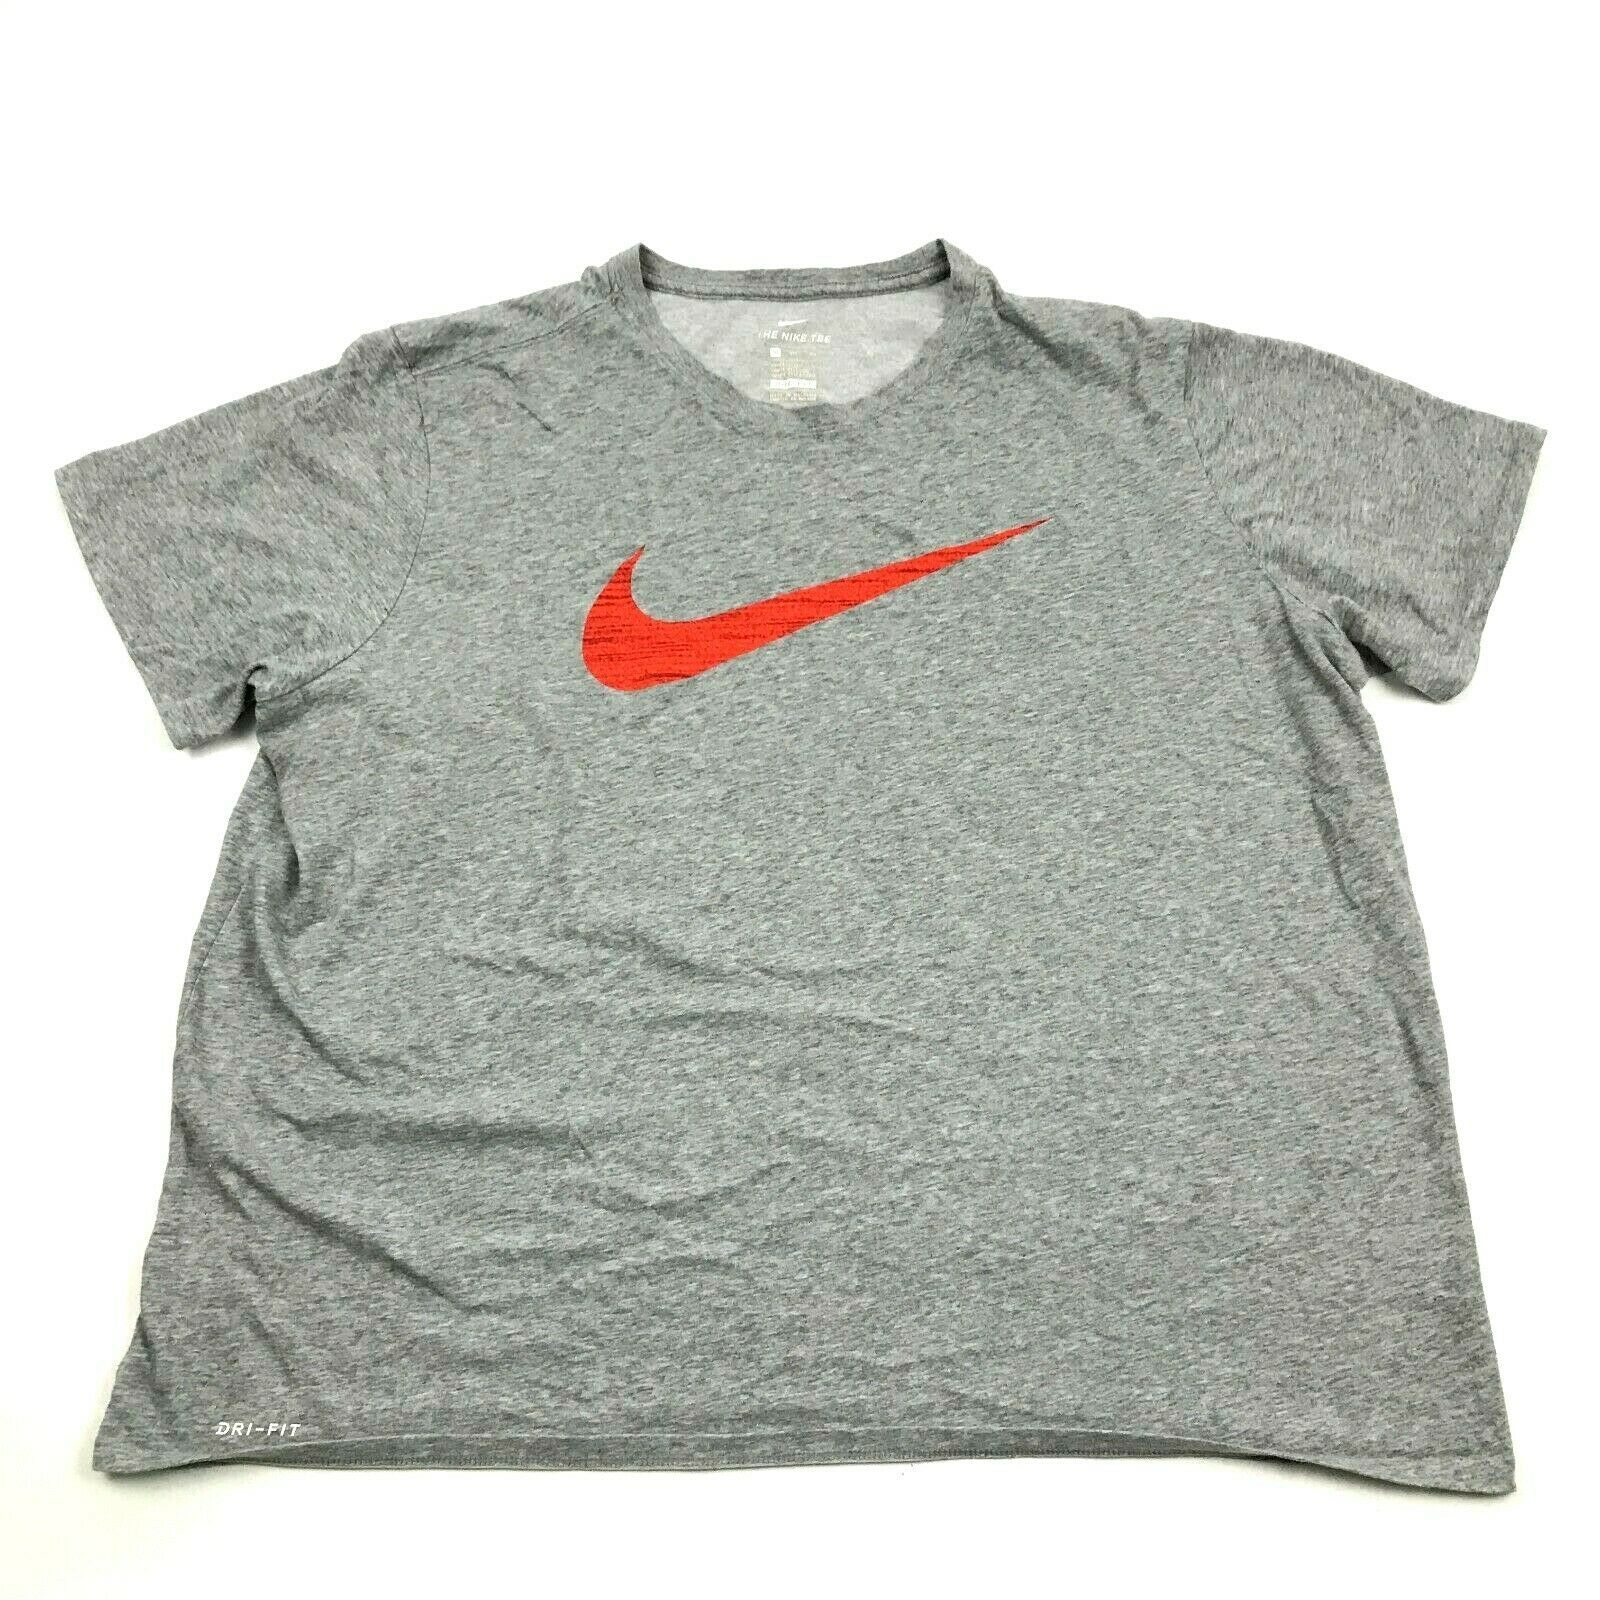 Nike Dry Fit Shirt Mens Size 3XL XXXL Athletic Cut Gray Polycotton ...